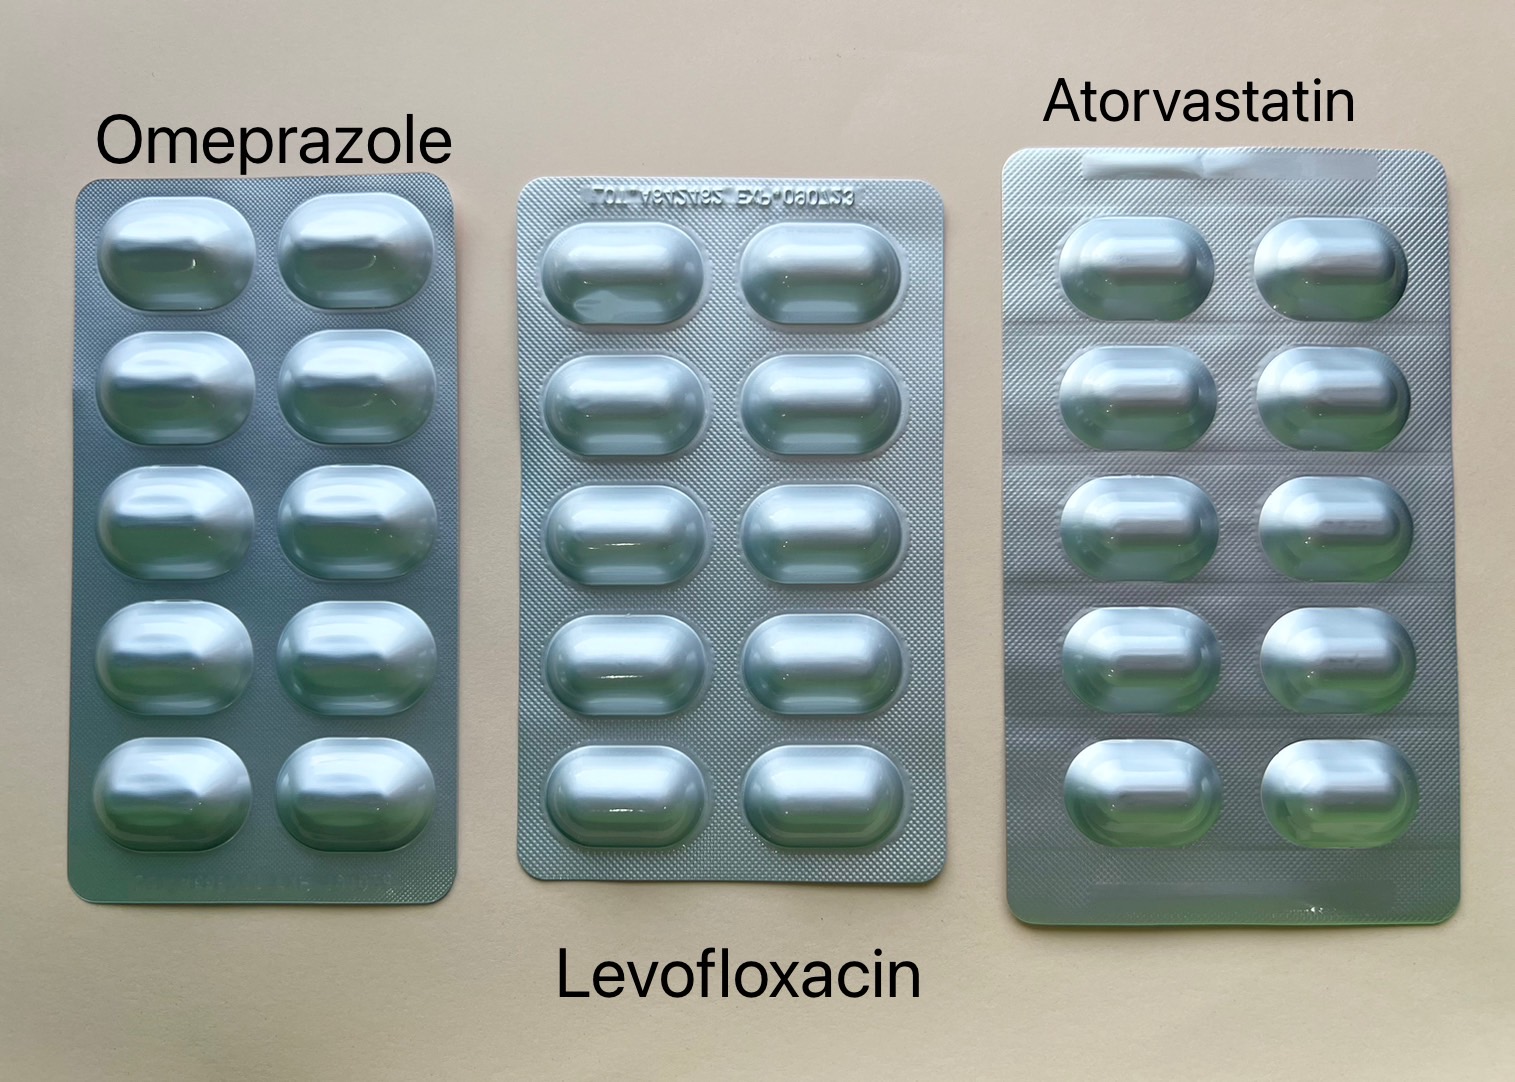 Levofloxacin มองคล้ายกับ Omeprazole และ Atorvastatin